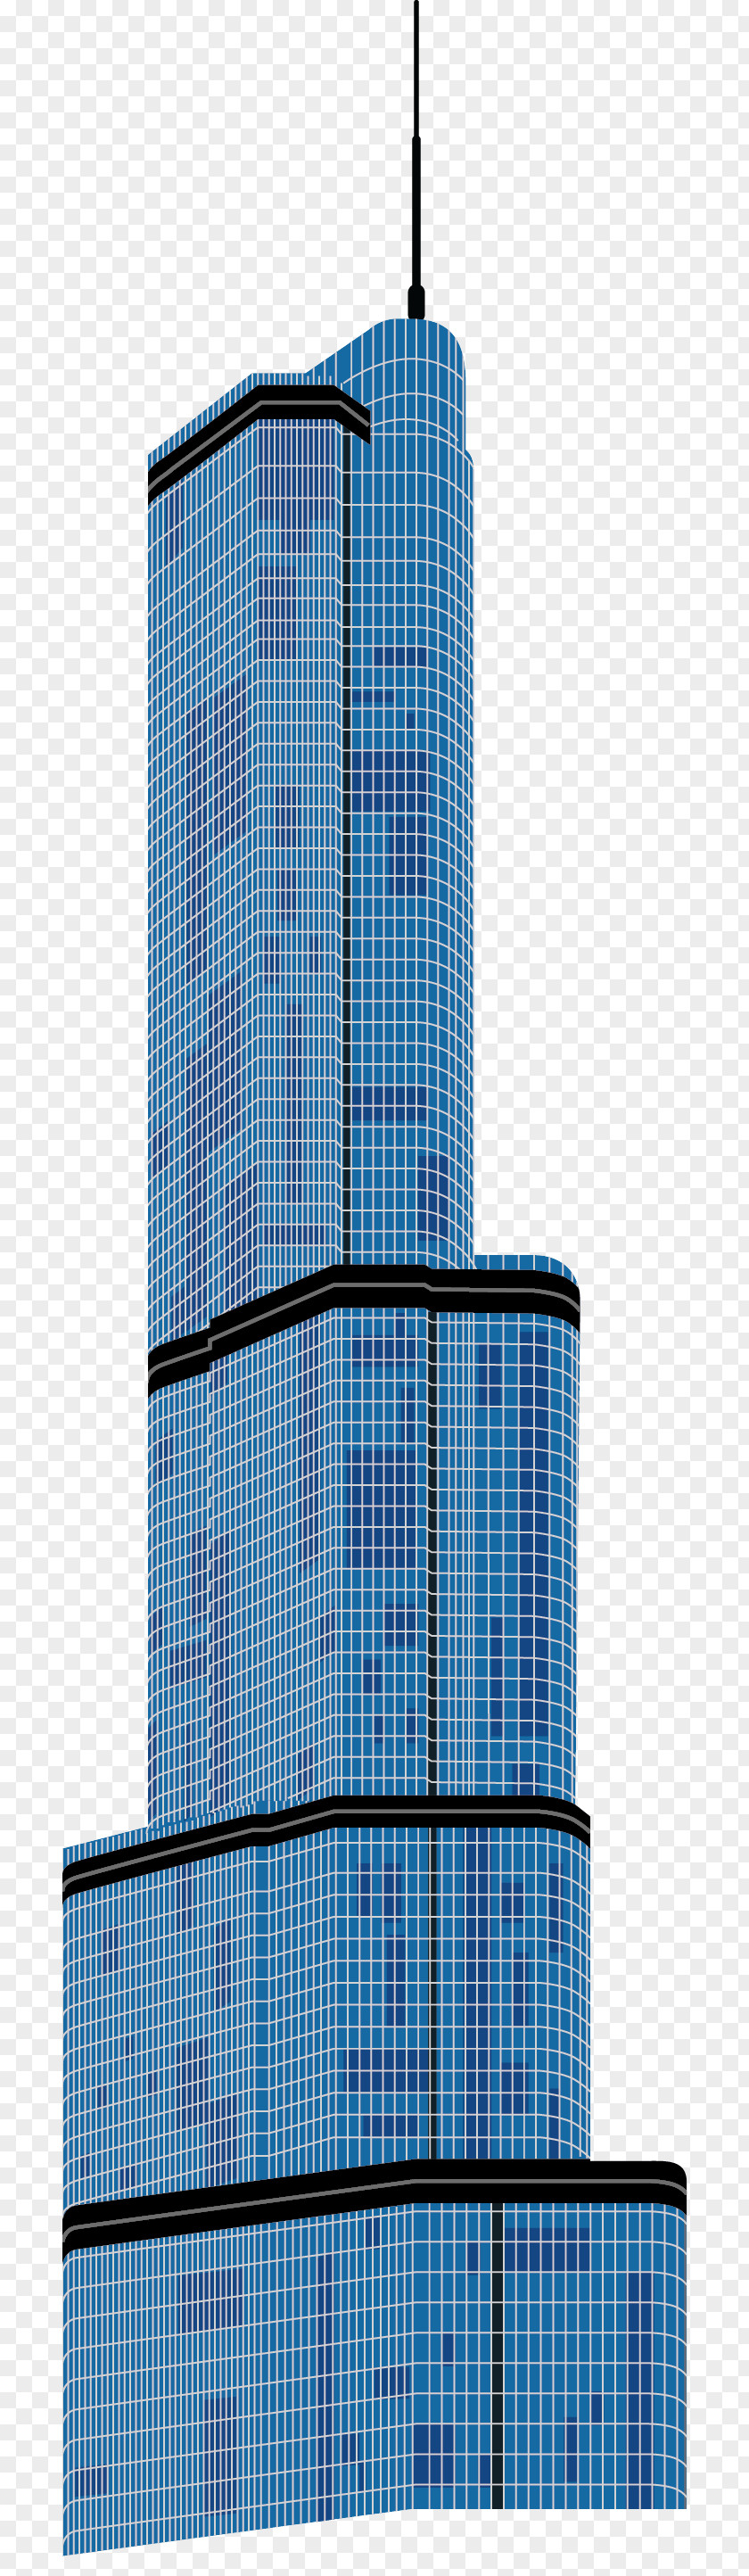 Donald Trump Commercial Building Facade Skyscraper Corporate Headquarters PNG